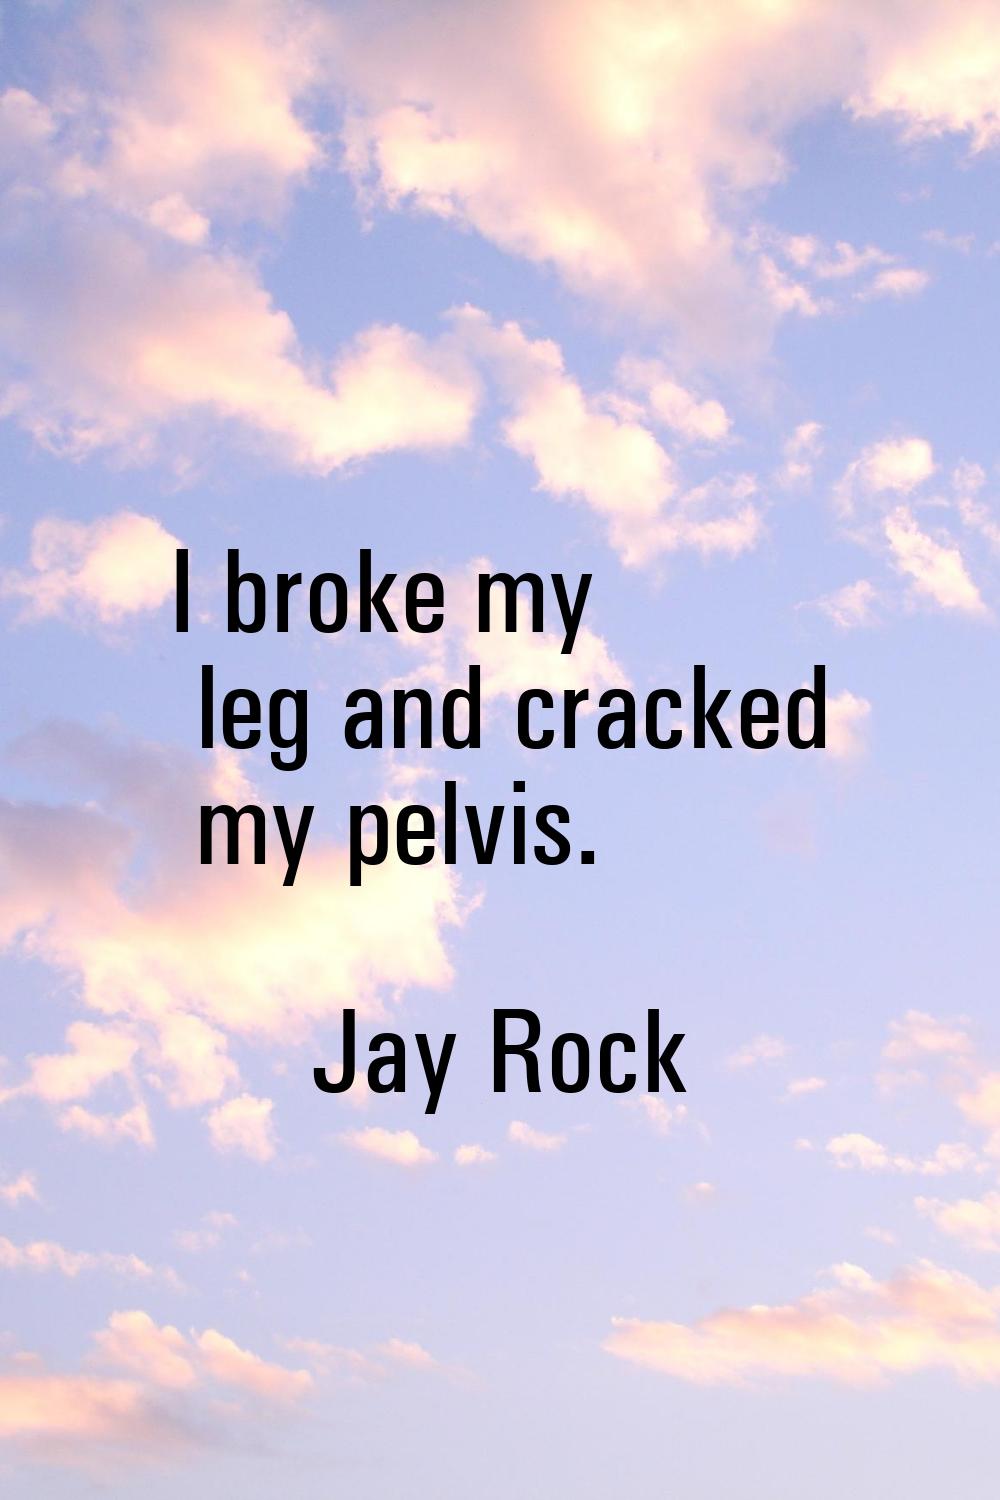 I broke my leg and cracked my pelvis.